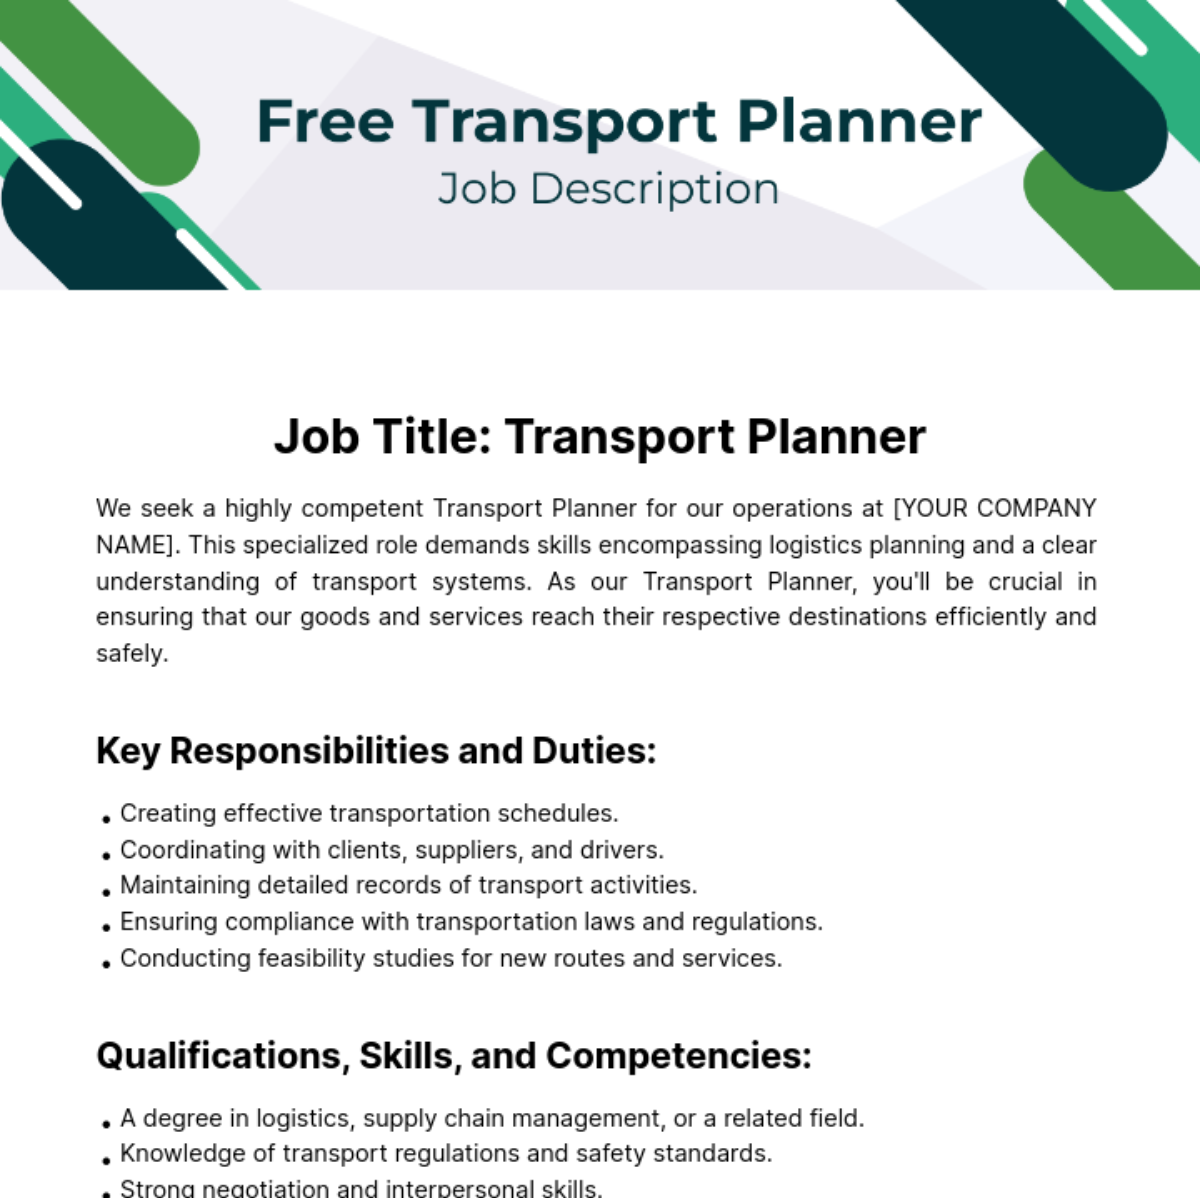 Free Transport Planner Job Description Template